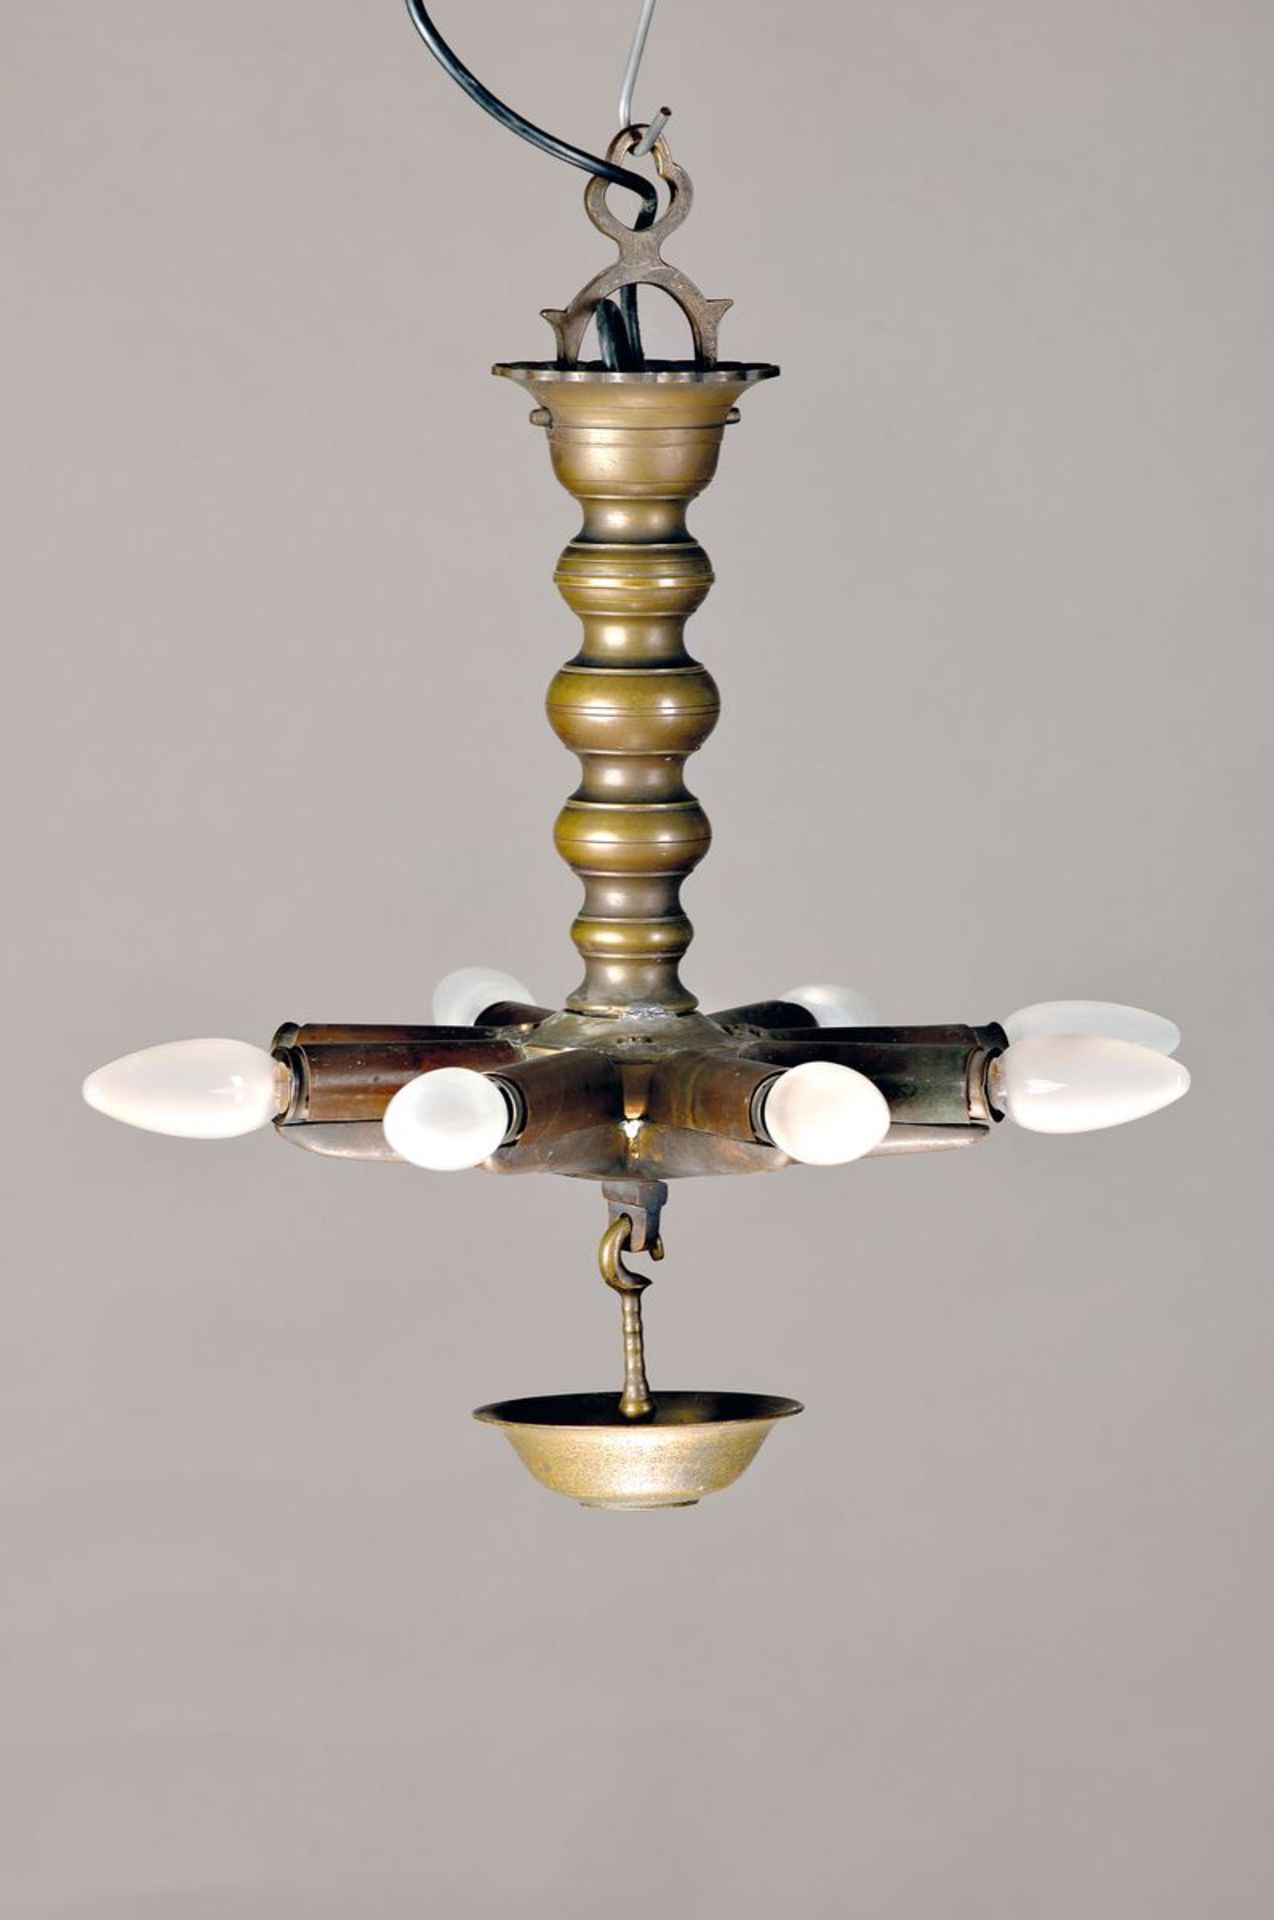 Deckenlampe, Shabbat-Lampe, 19. Jh., Bronze, 8 Brennstellen, später elektrifiziert, H. ca. 50 cm, D.